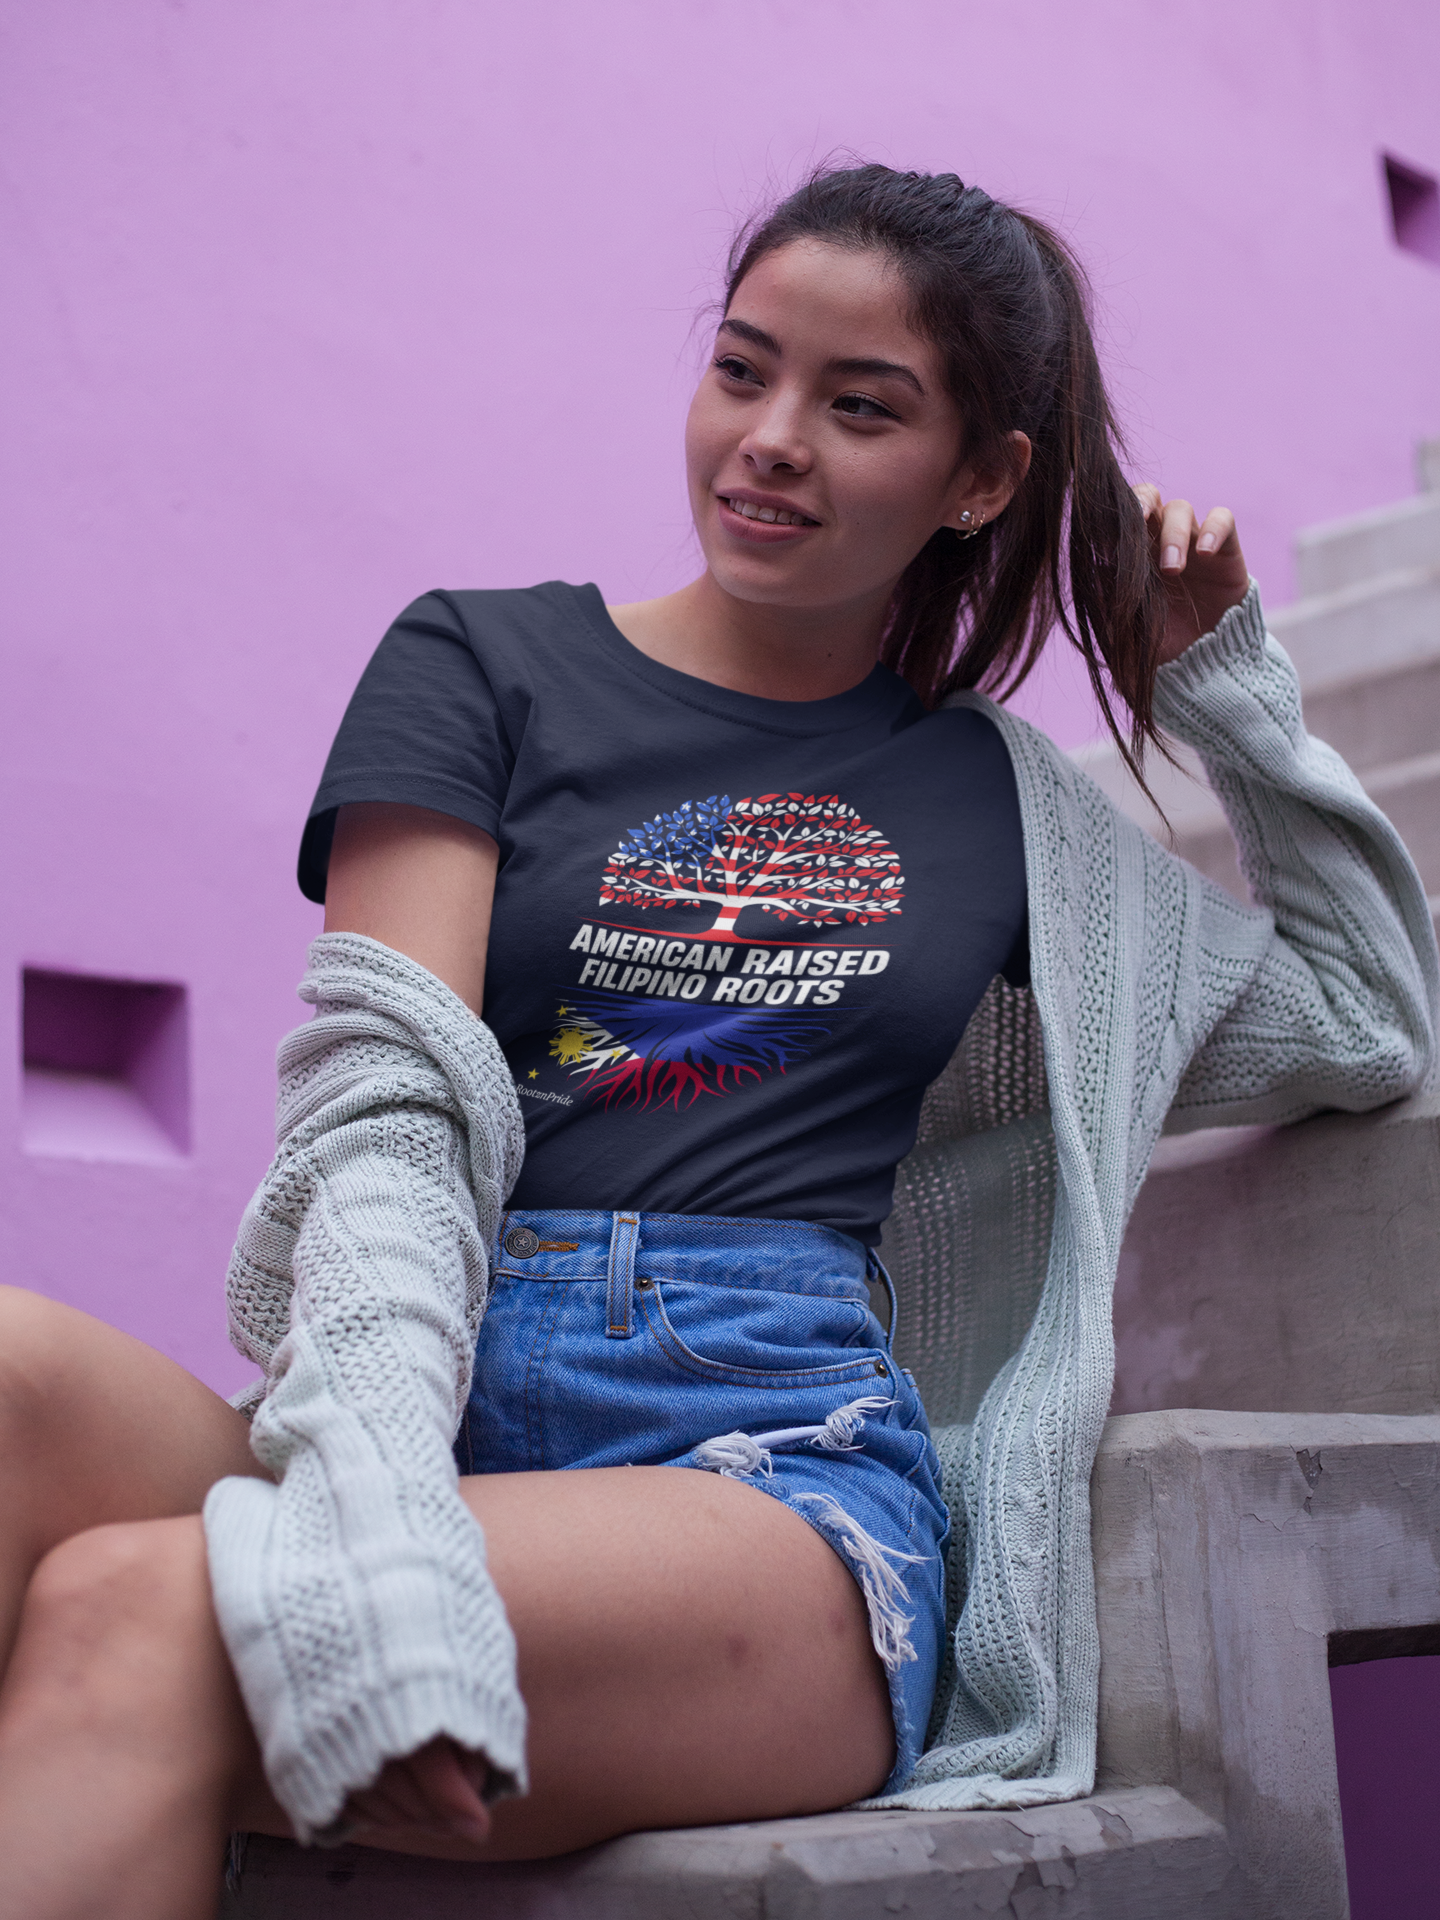 Filipino Roots Design 3: Adult T-Shirt